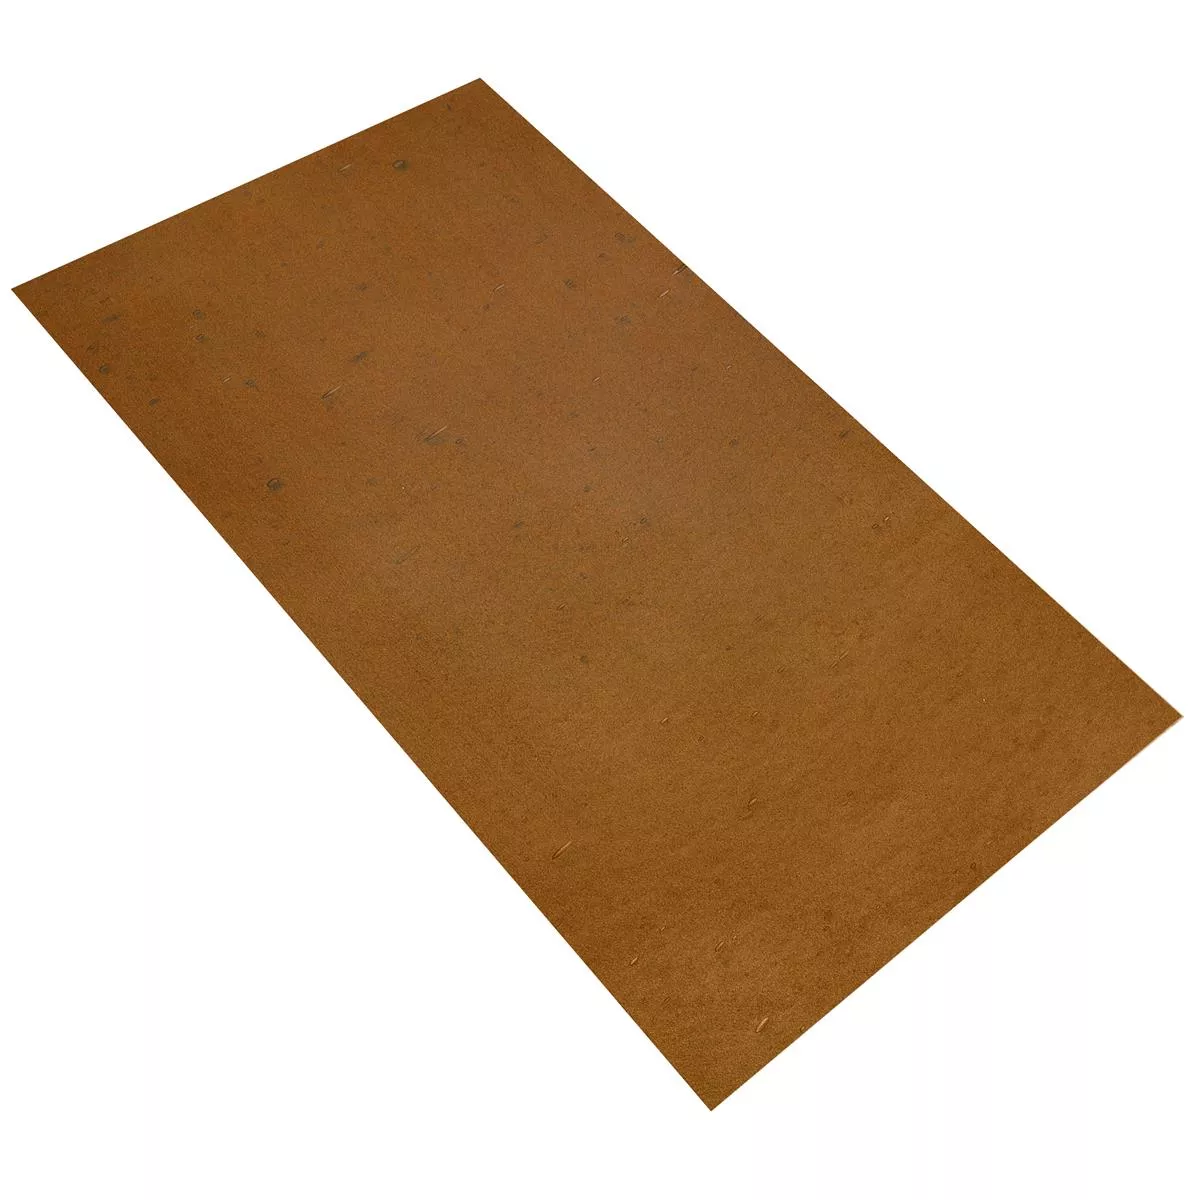 Staklo Zidne Pločice Trend-Vi Supreme Copper 30x60cm